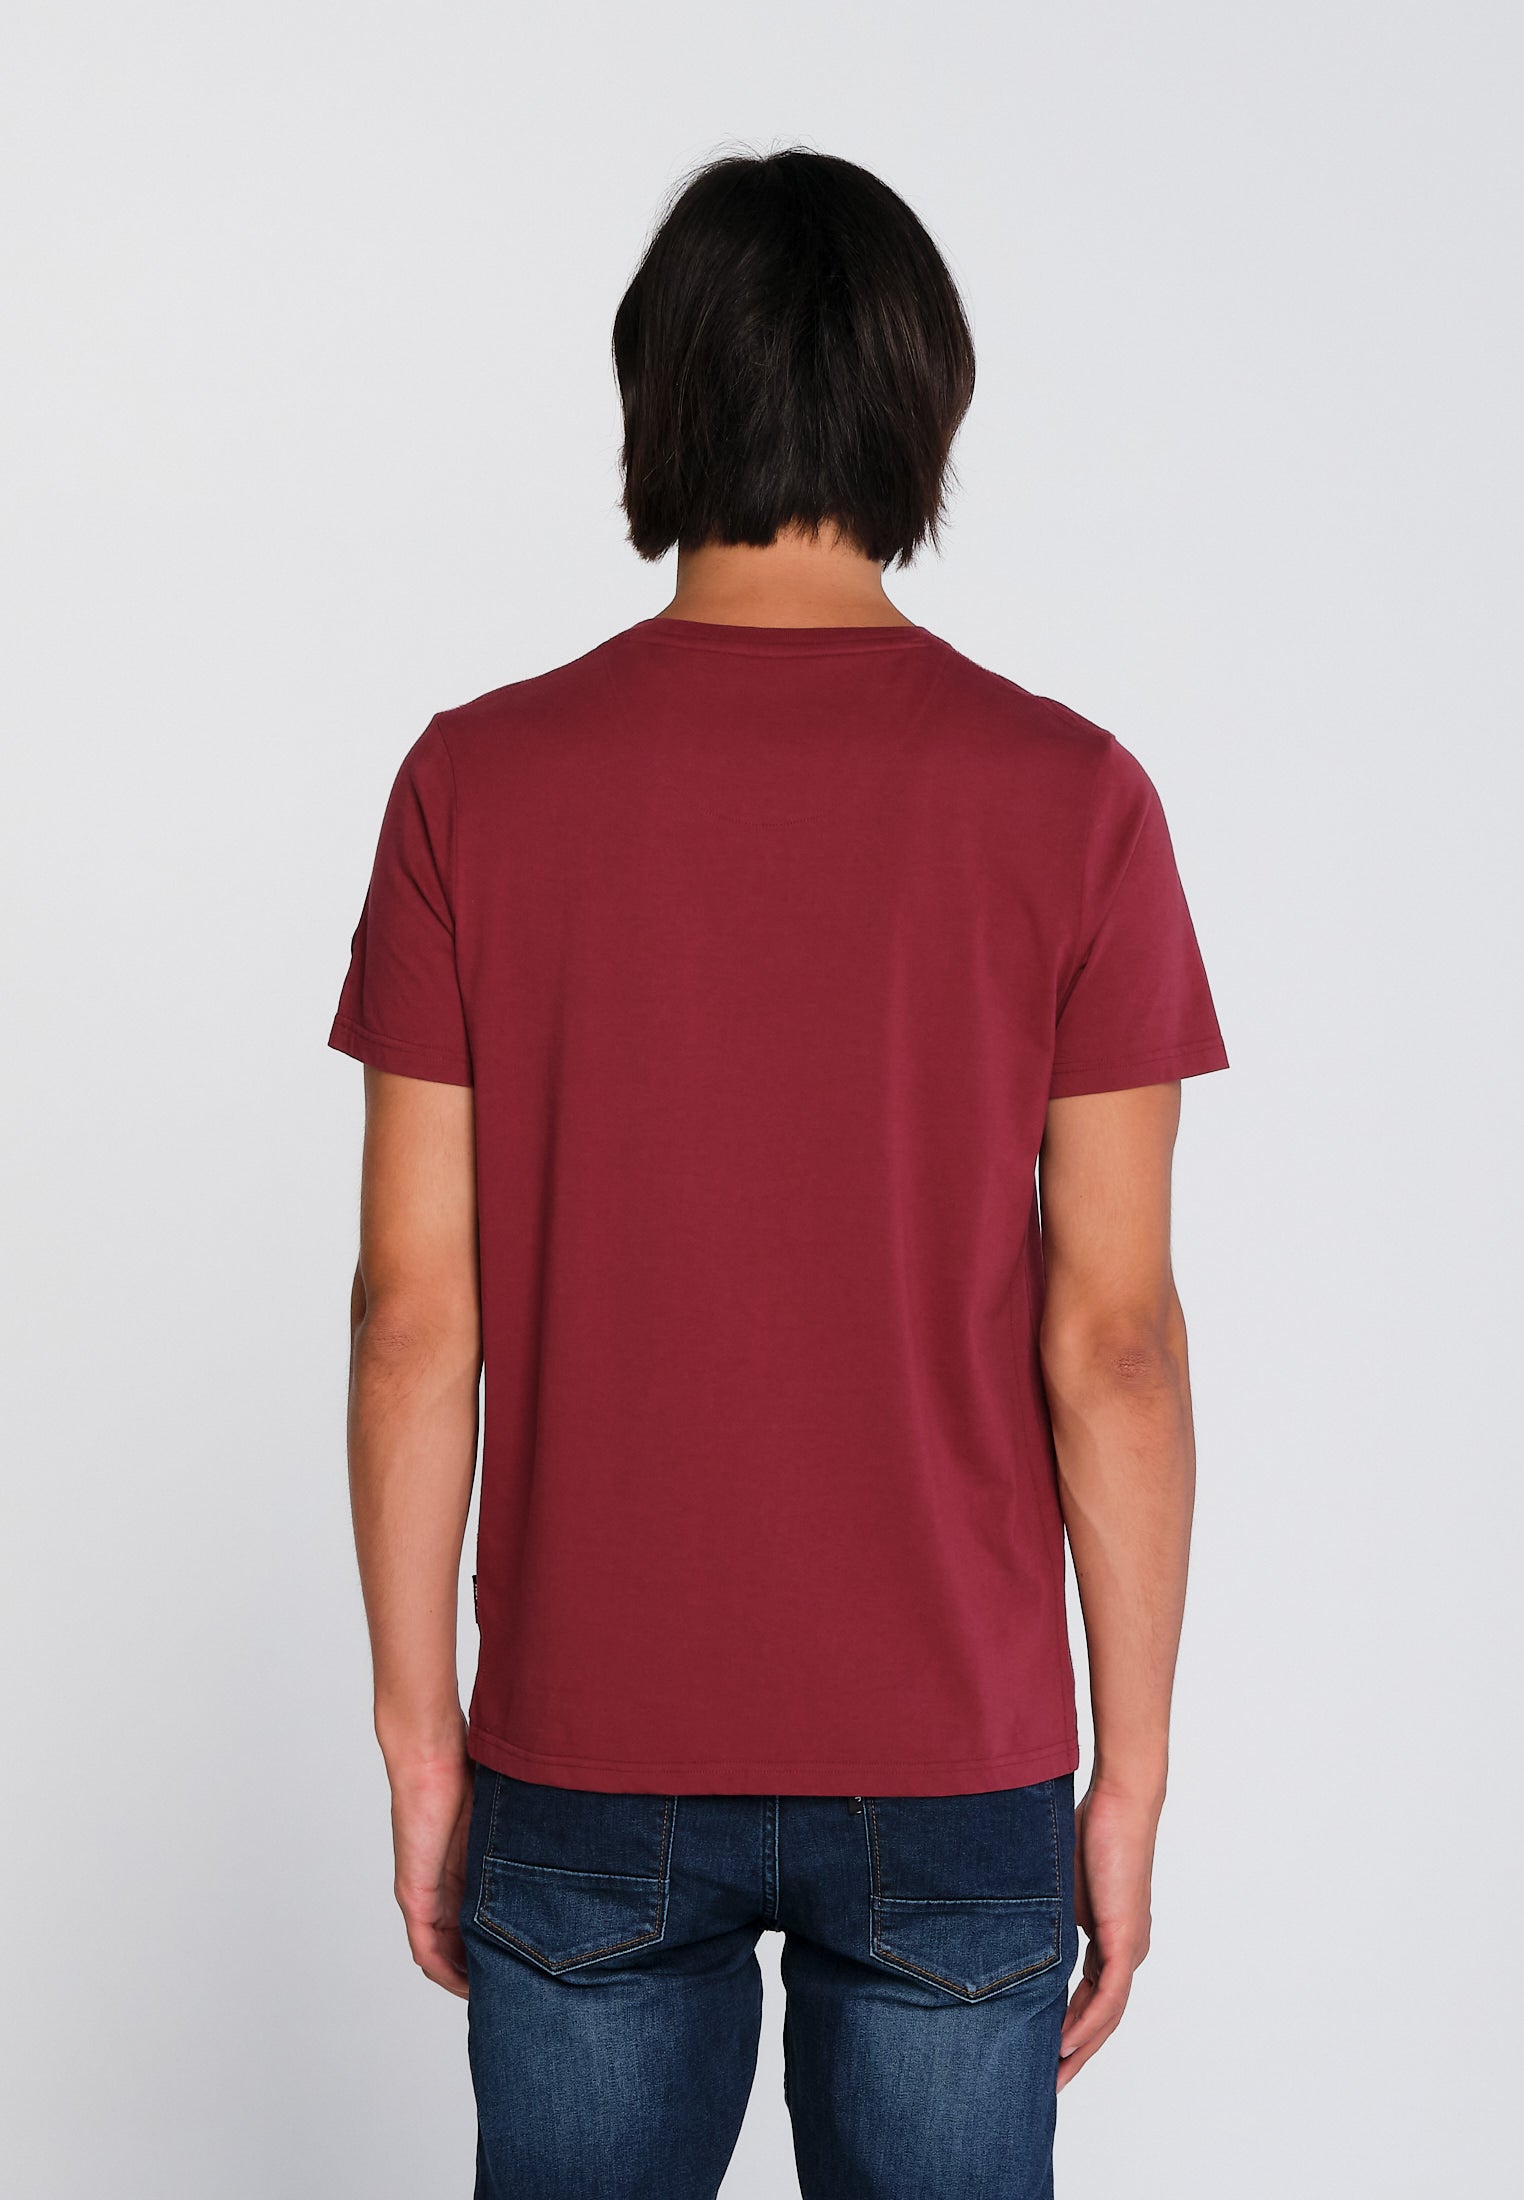 T-Shirt Homme Essentials 03 Burgundy | J&JOY.